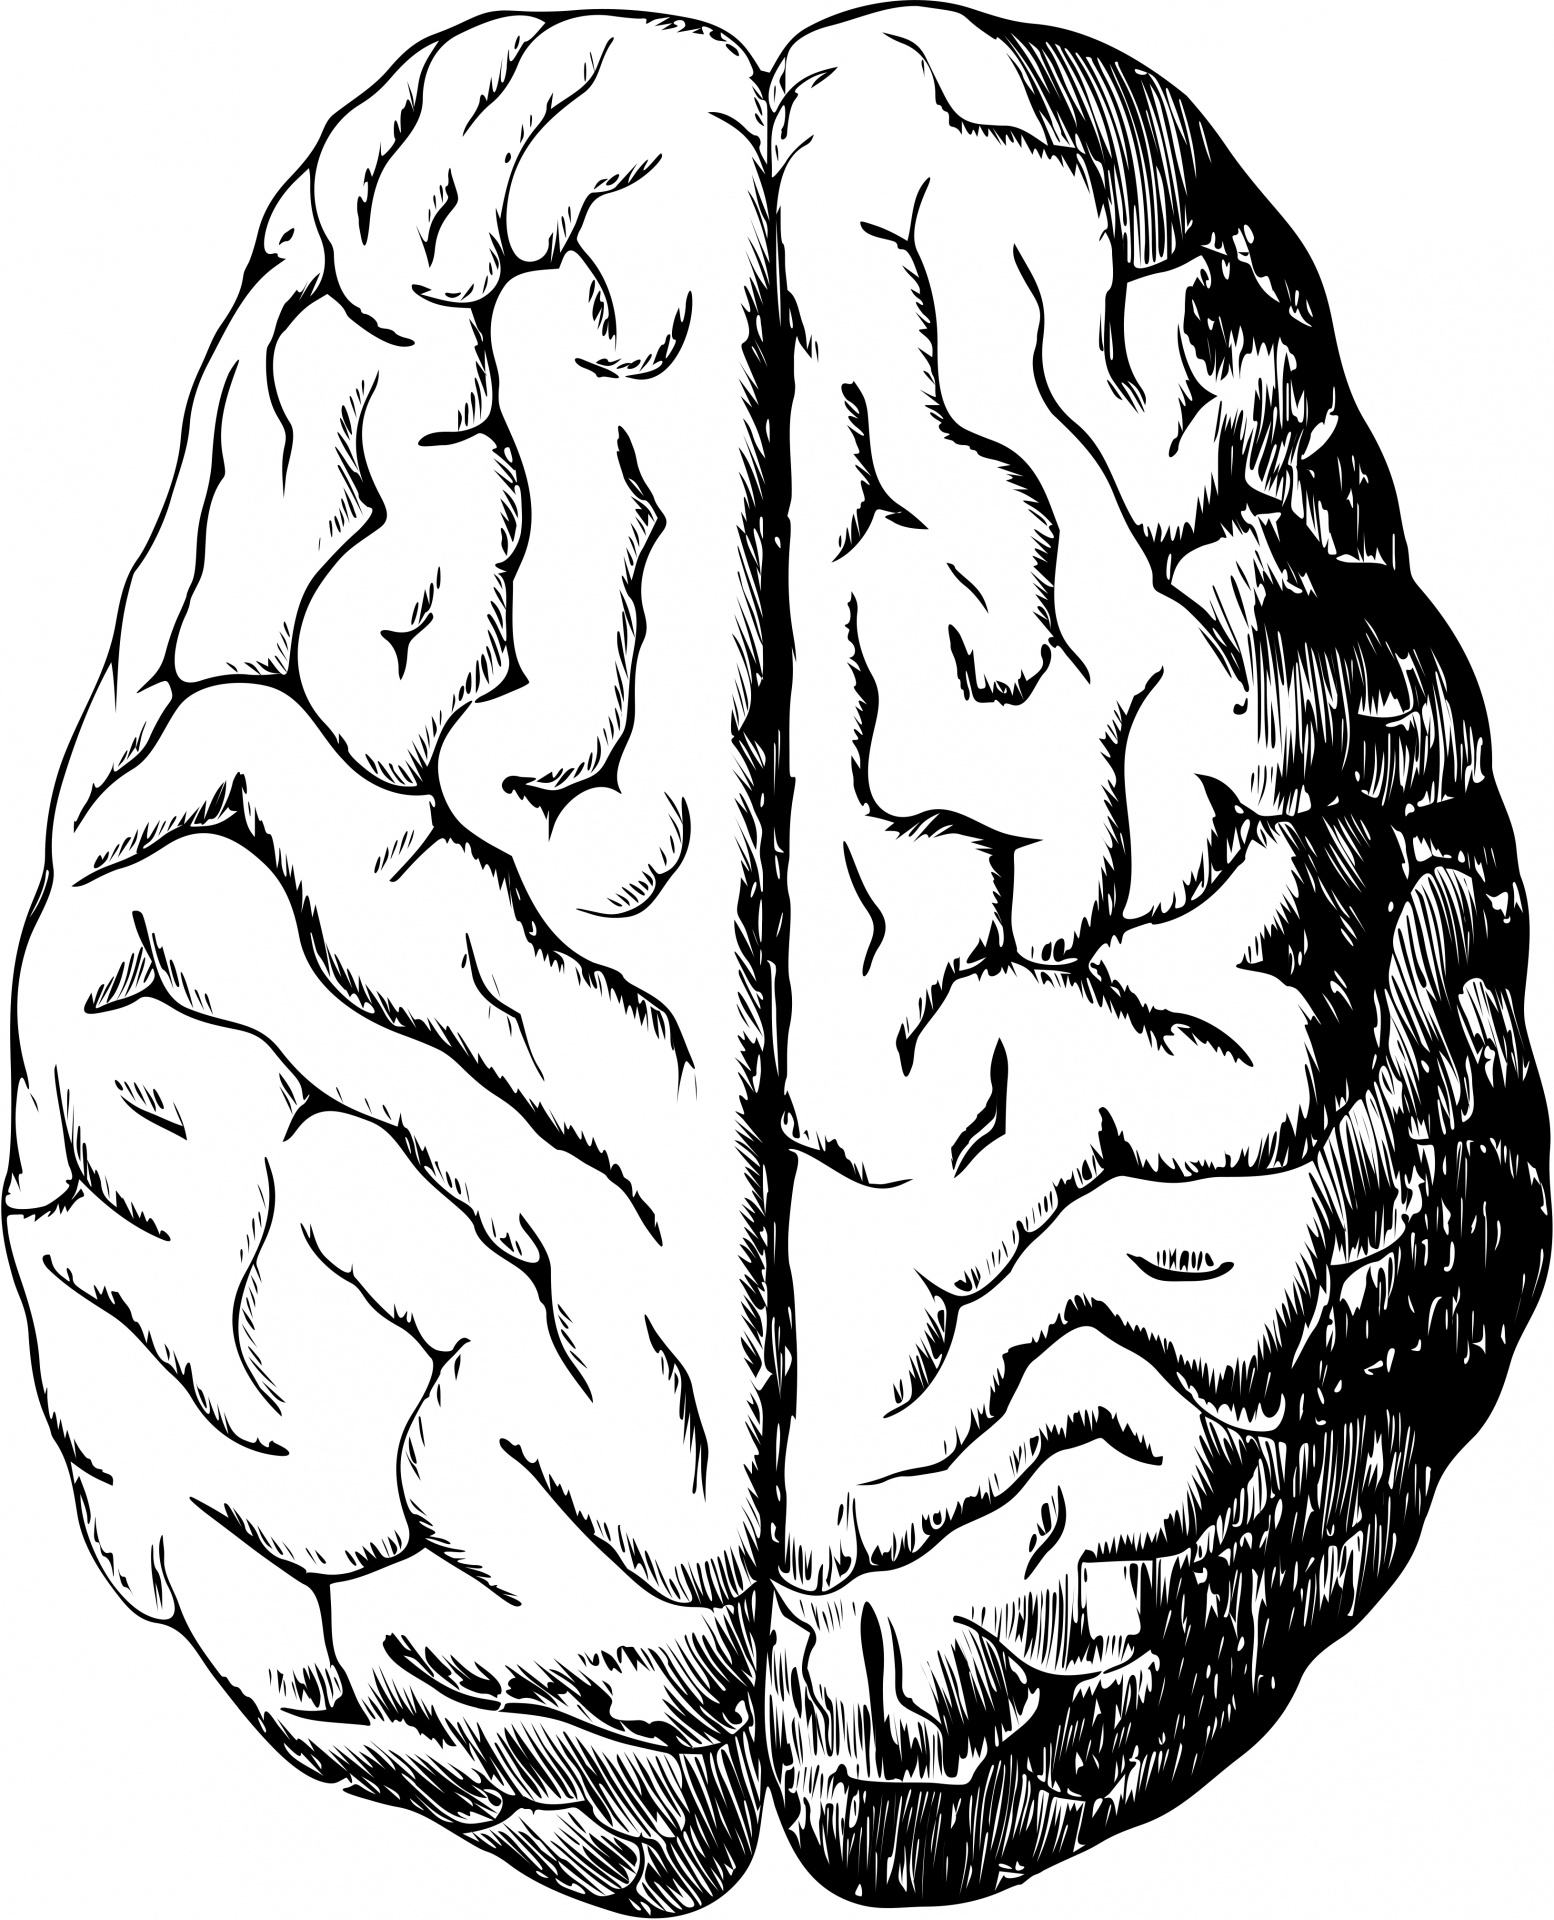 human-brain-1443447004ROS.jpg